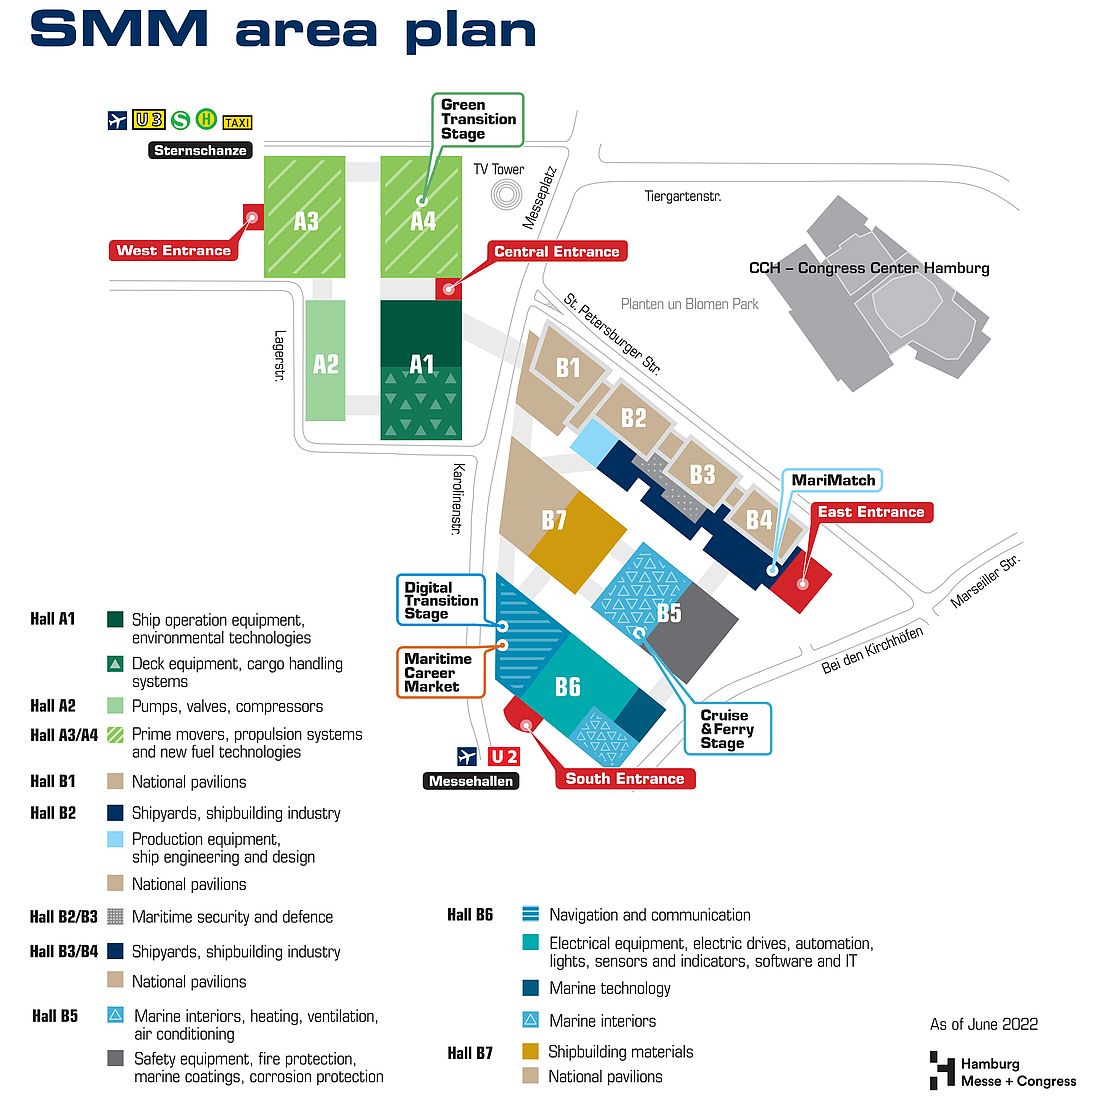 csm sm22 area plan 300dpi 407c54d41d